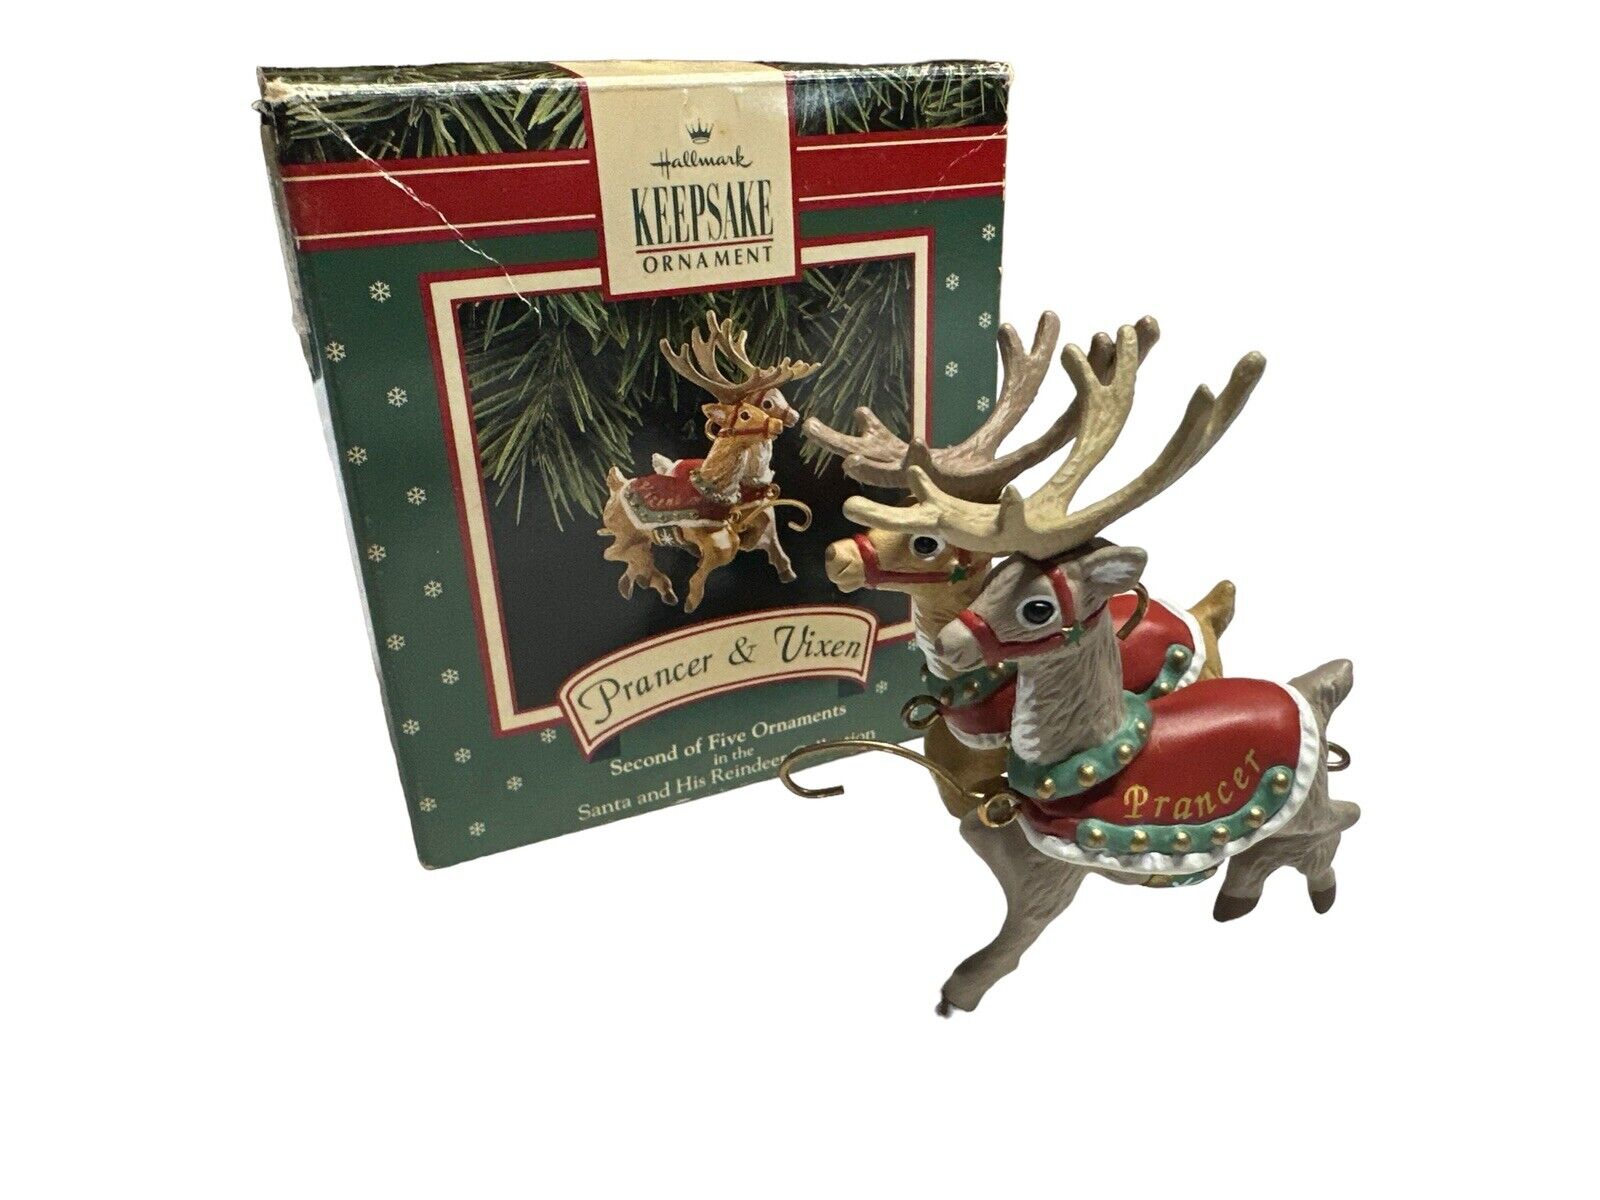 1992 Hallmark Keepsake Ornament Prancer & Vixen Santa & His Reindeer Collection